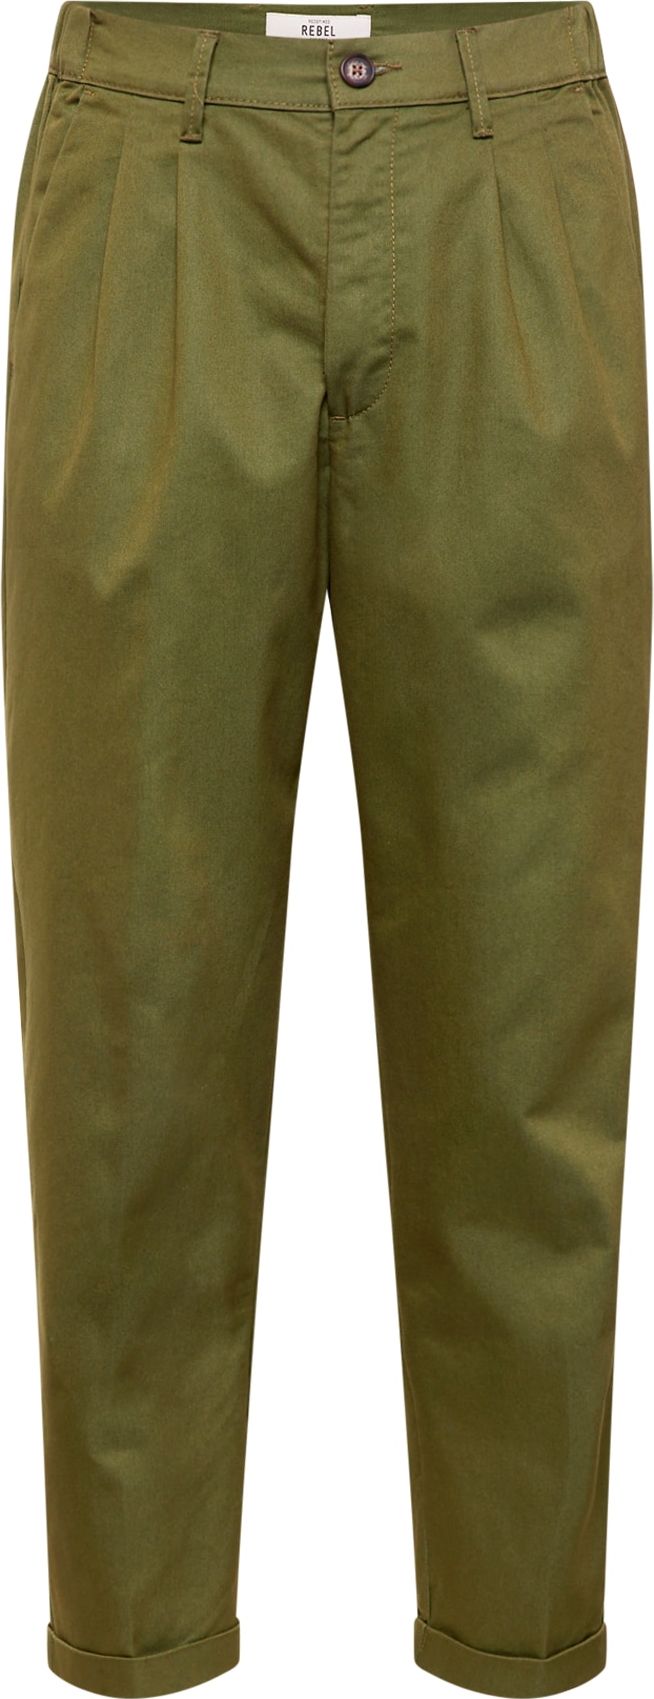 Kalhoty se sklady v pase 'Kevin' Redefined Rebel olivová